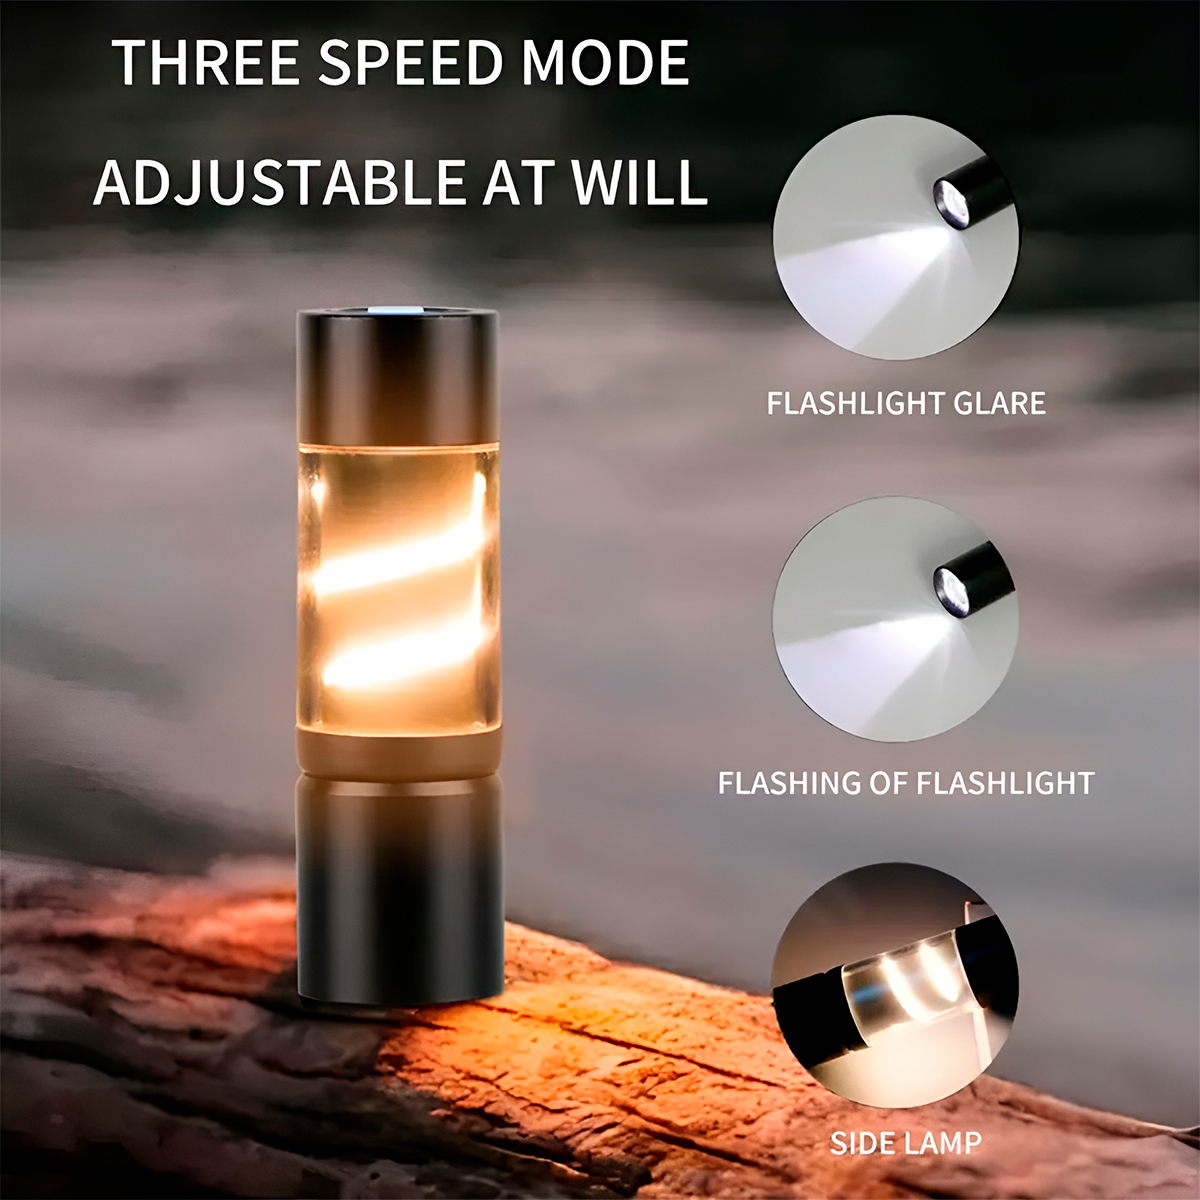 Mini linterna LED recargable y magnética . Curiosite